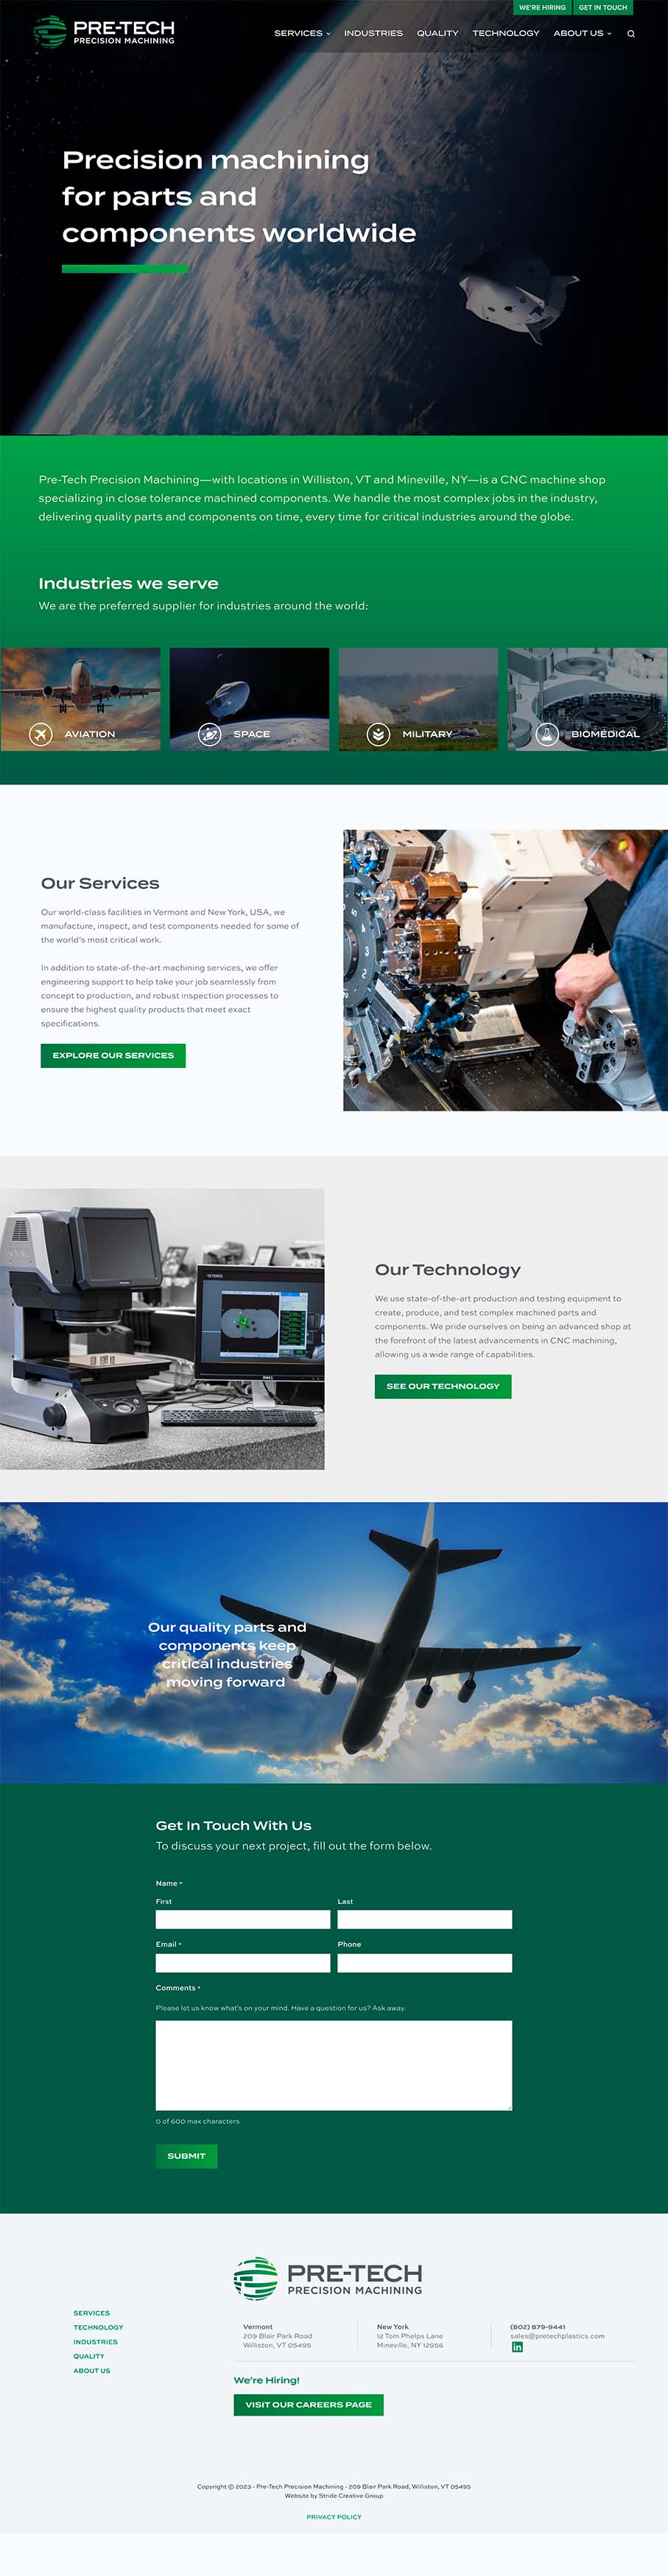 Pre-Tech Plastics homepage